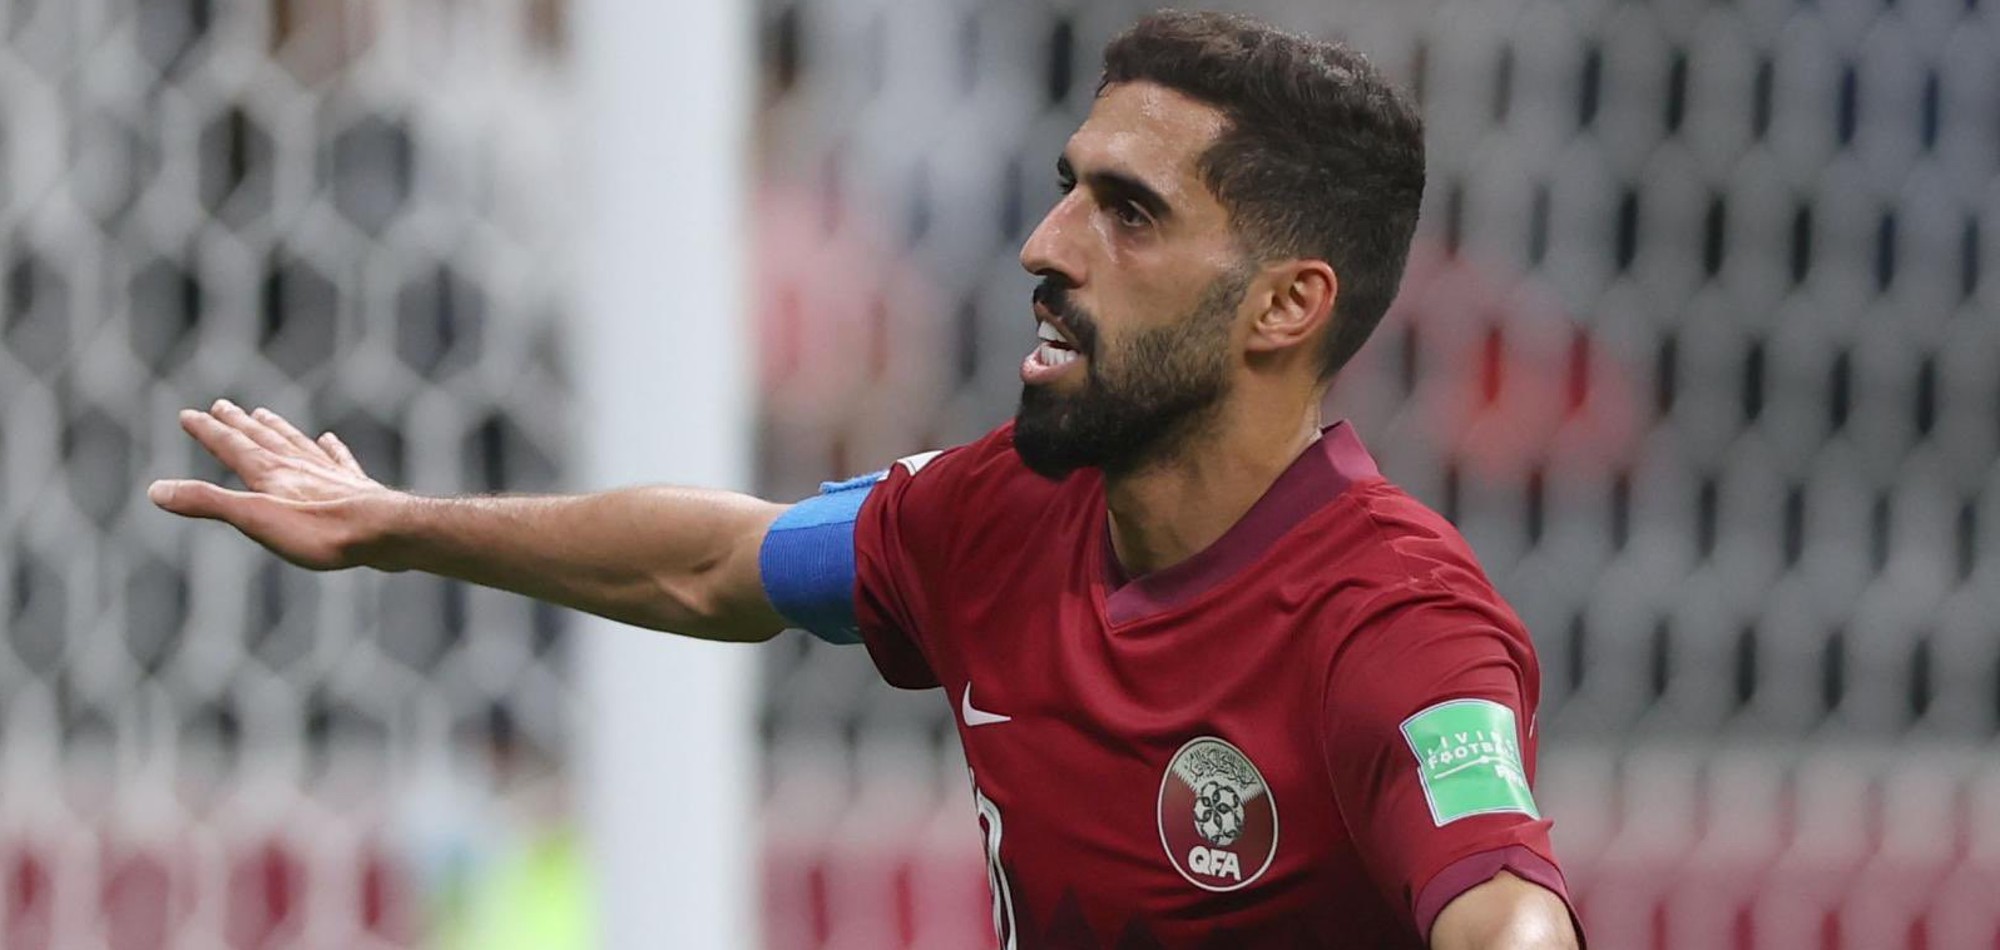 Qatar captain al-Haydos expects tough UAE challenge in quarters